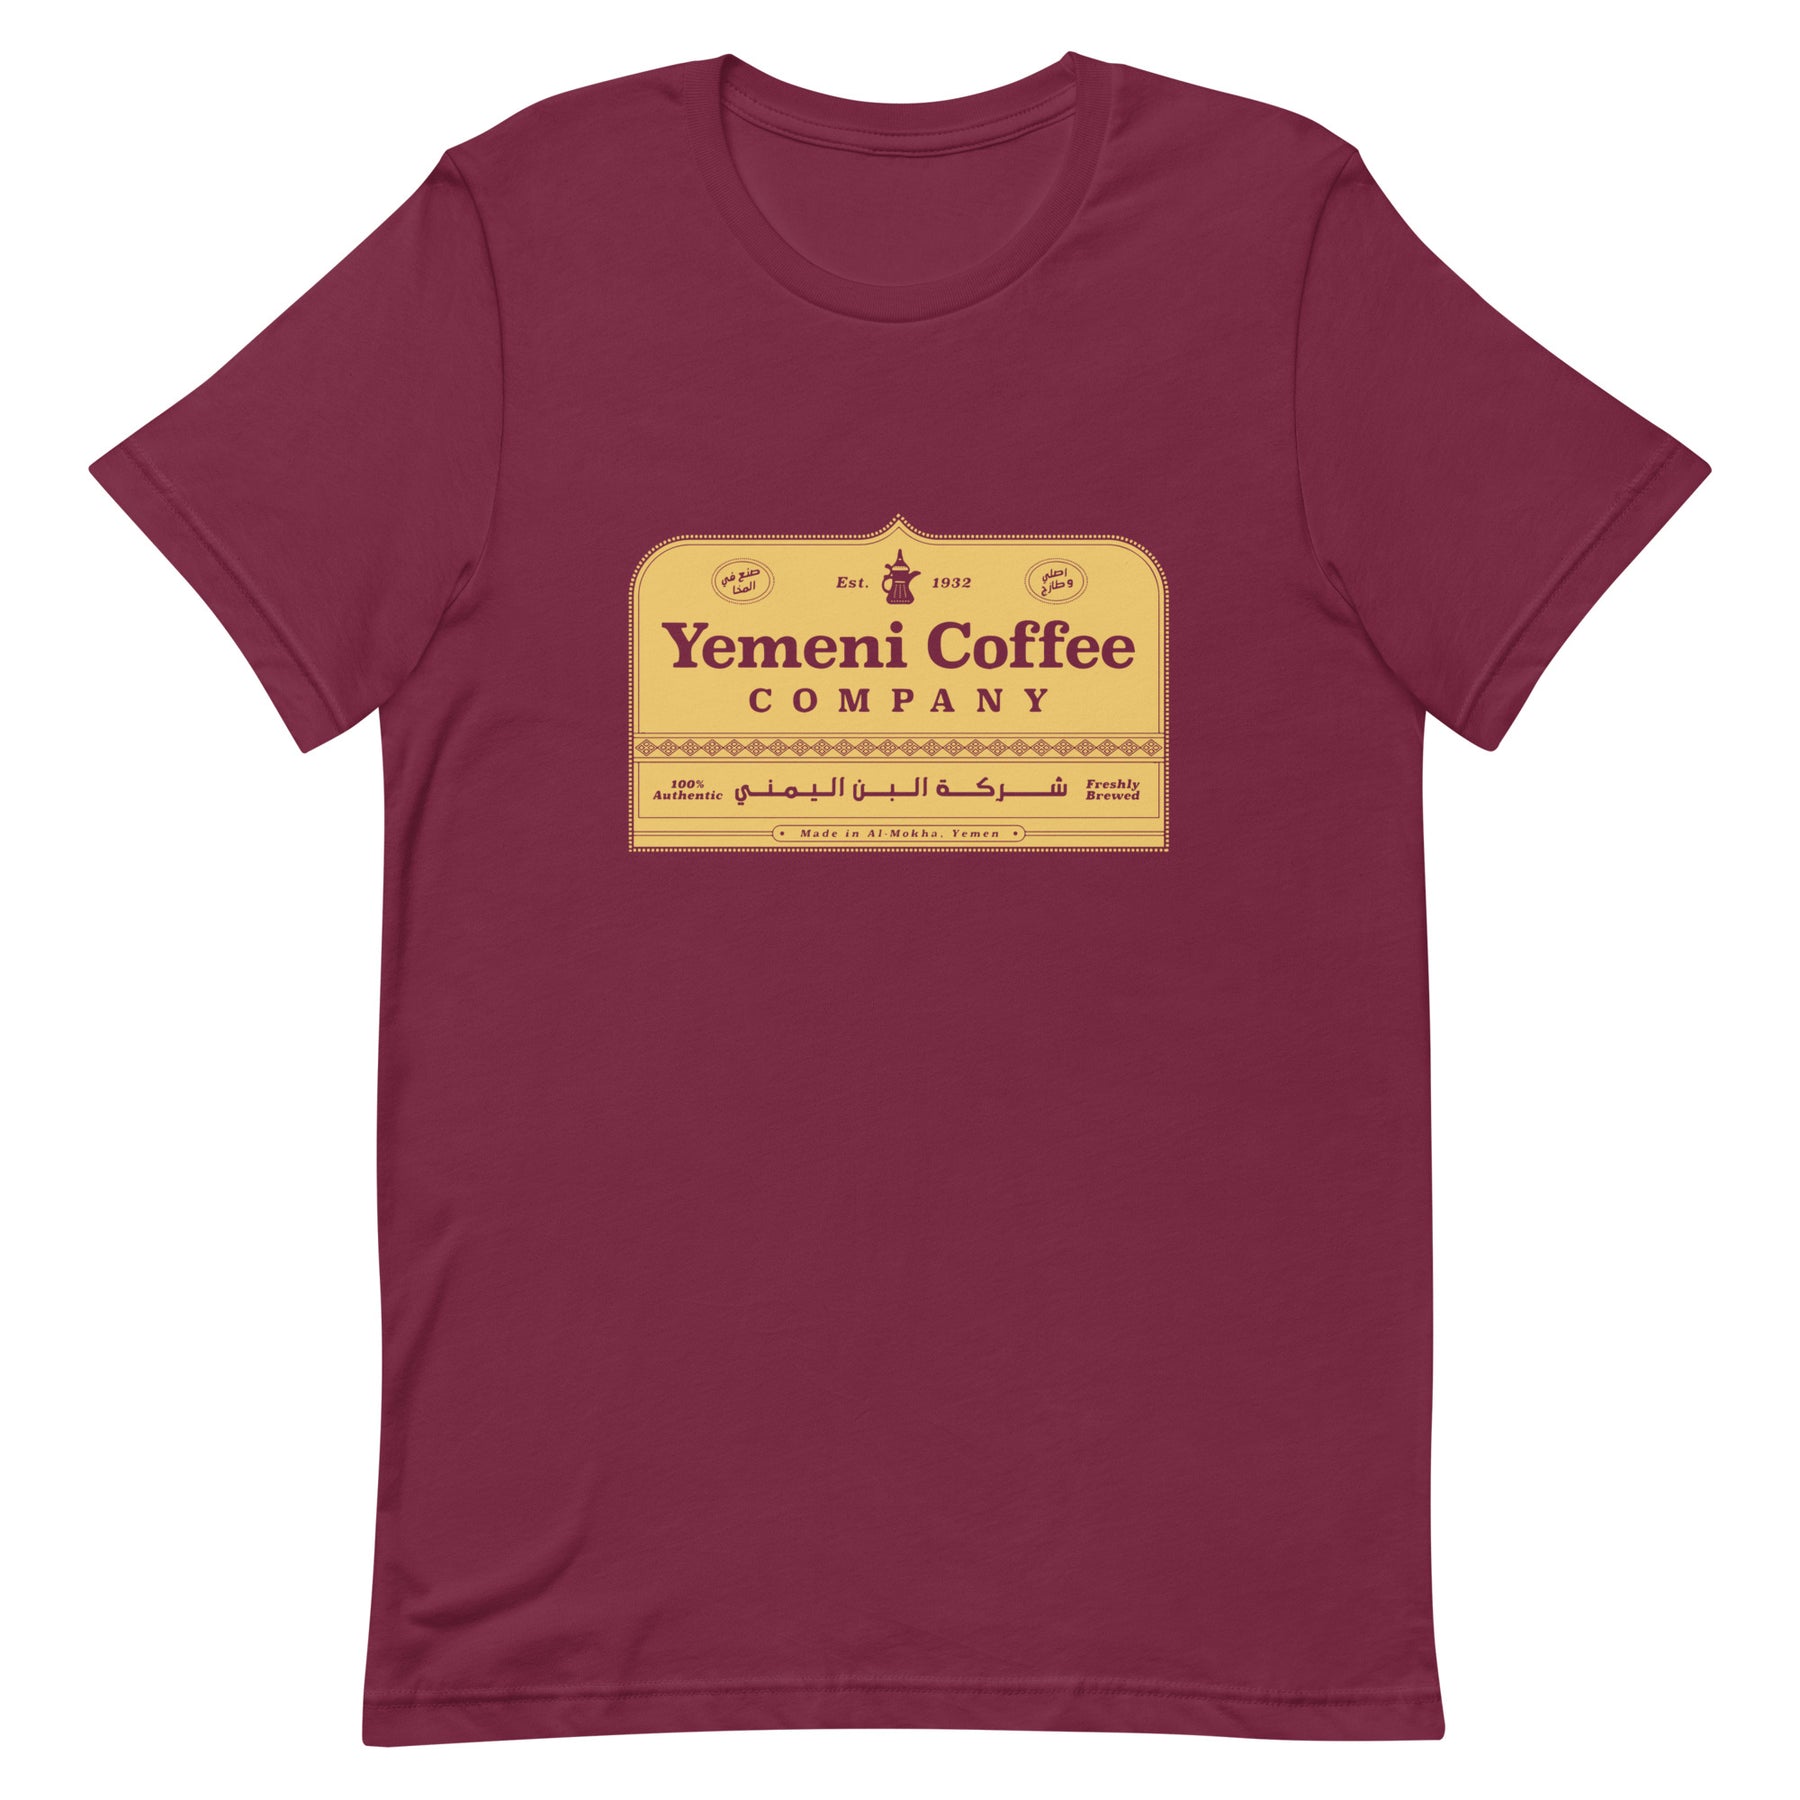 Yemeni Coffee Co. - T shirt